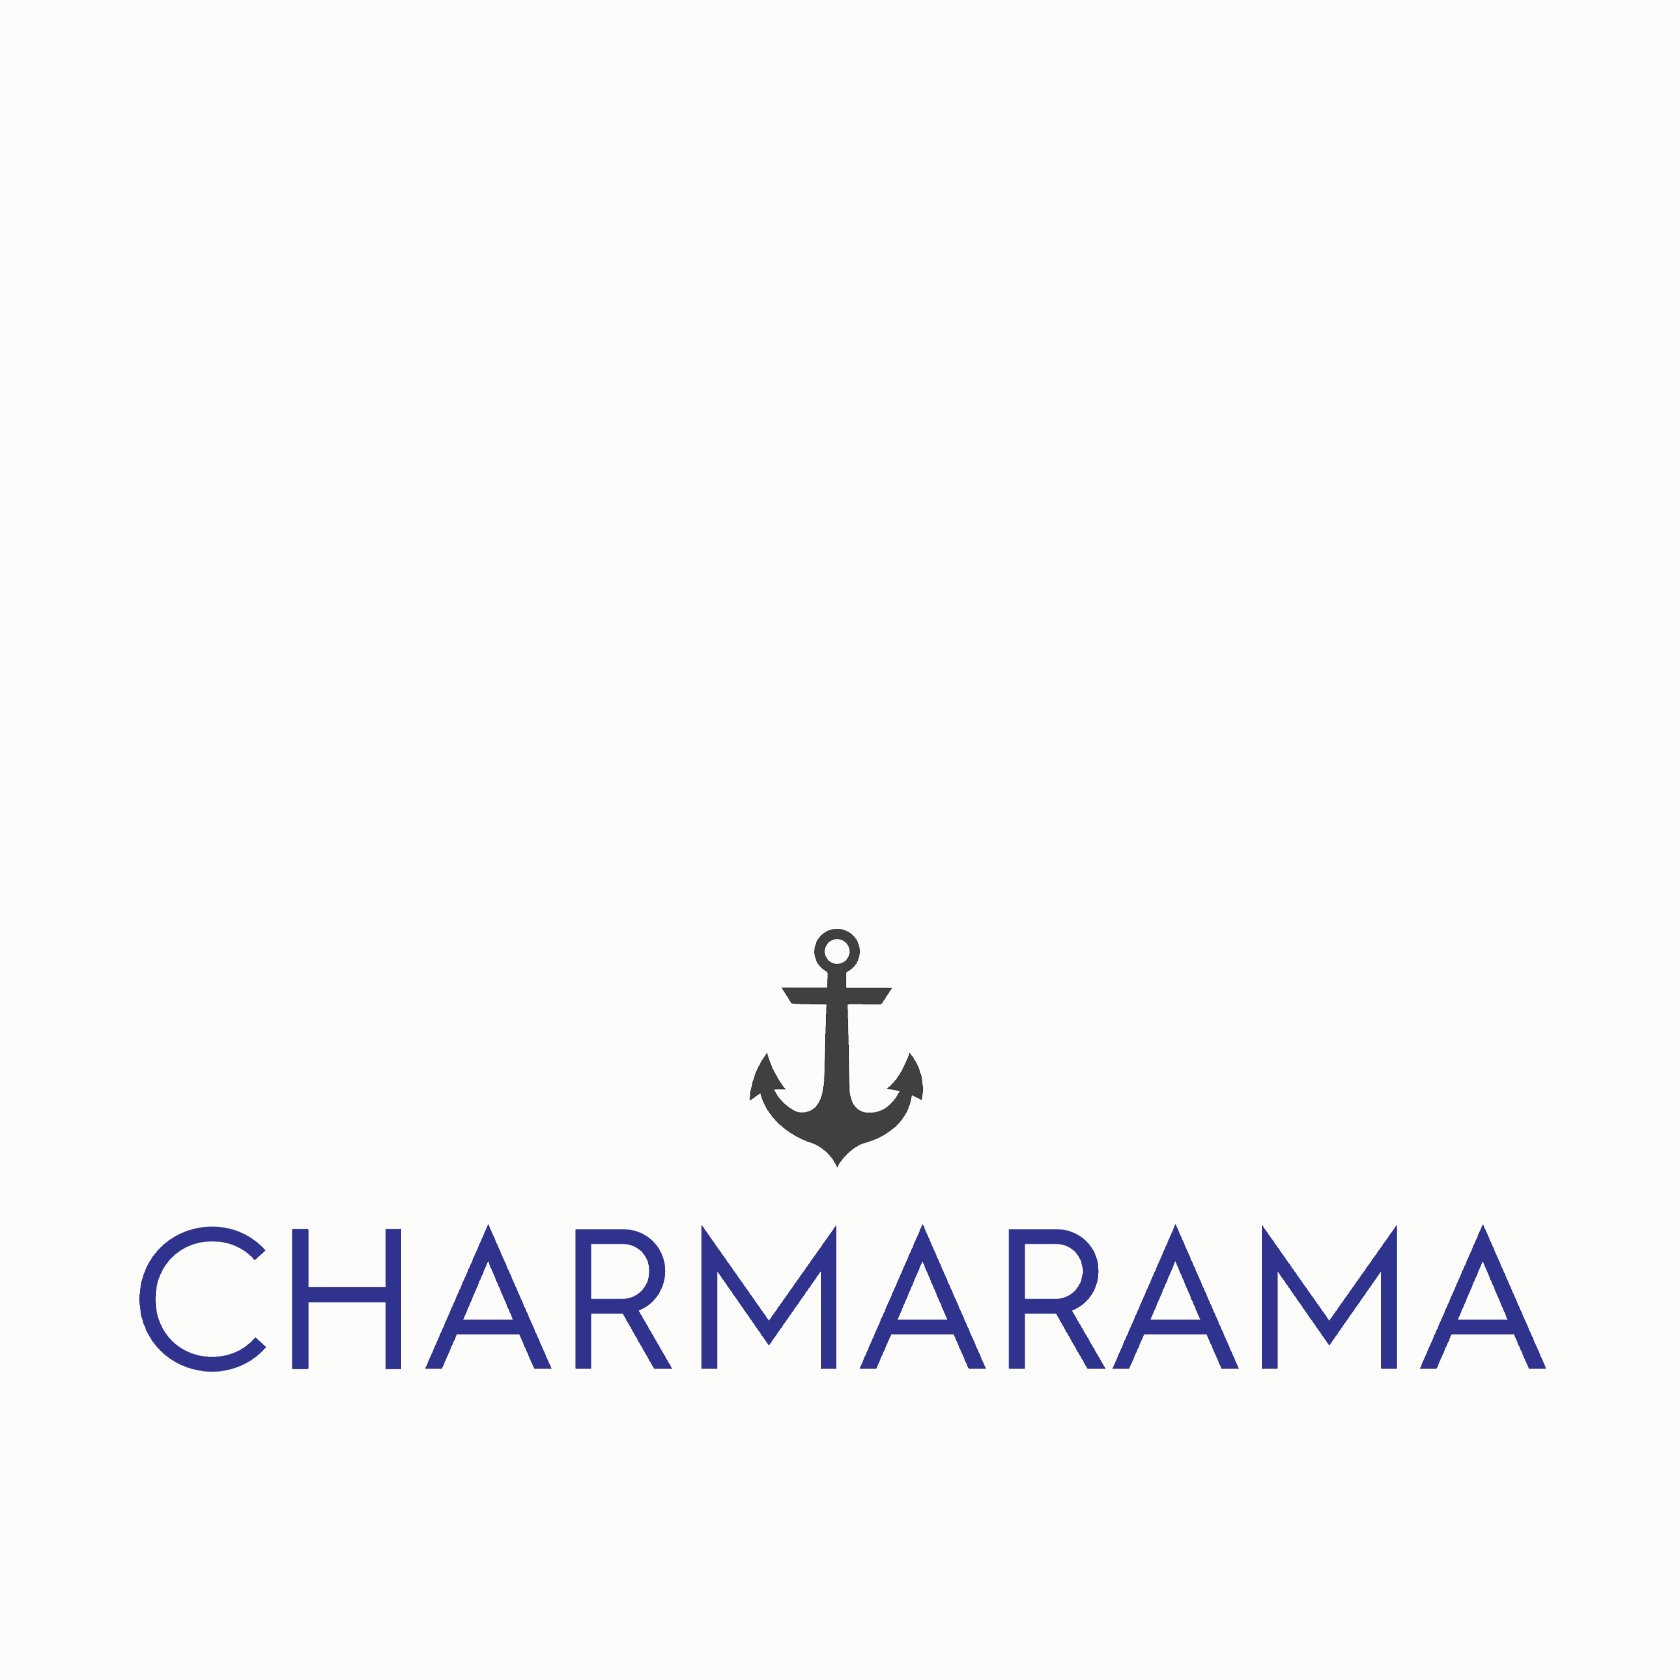 Promo codes Charmarama